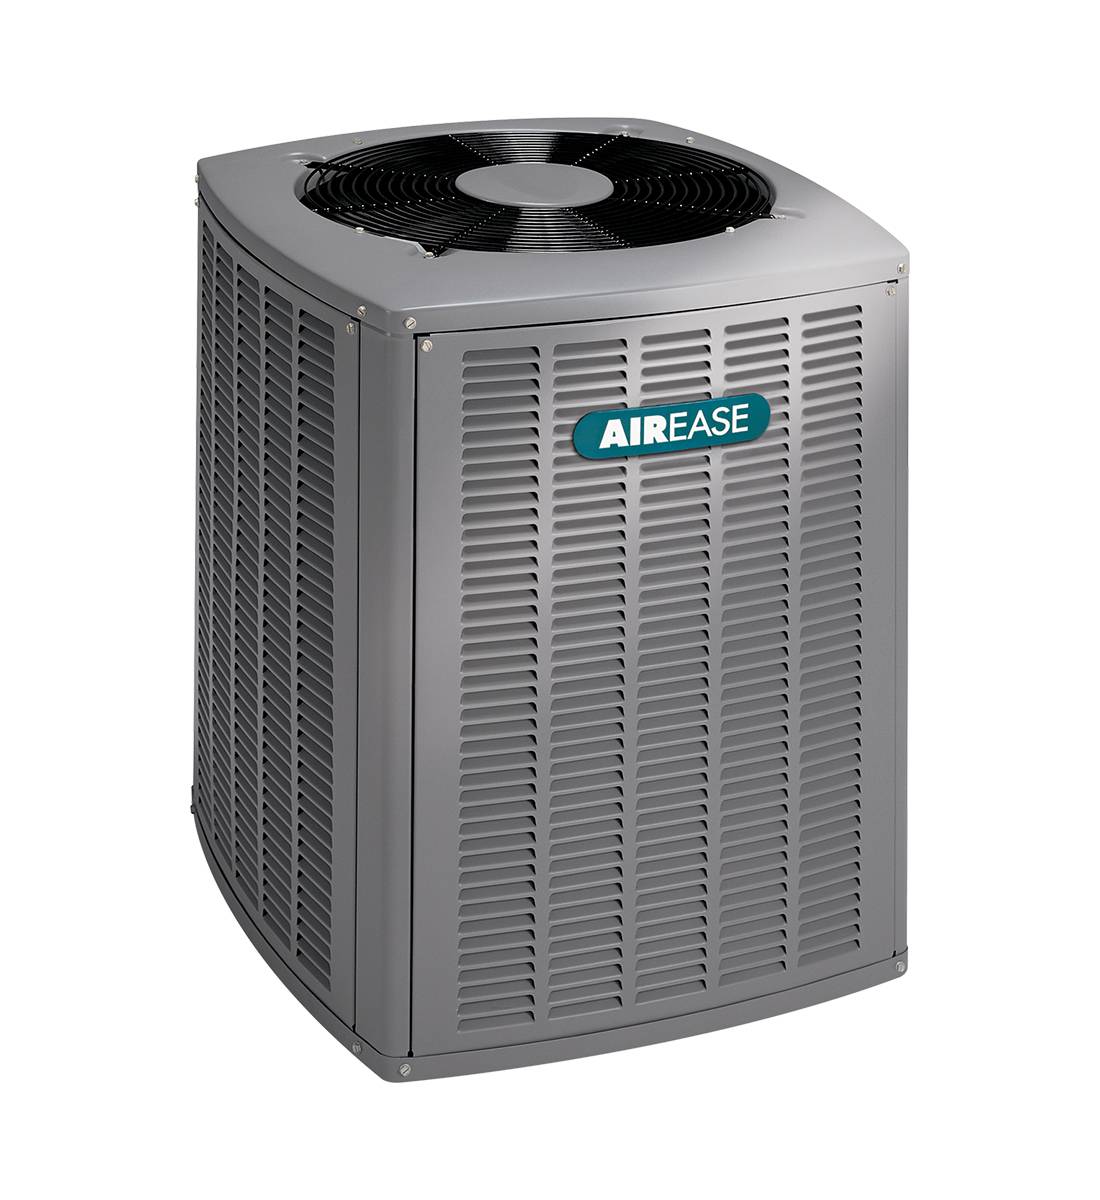 airease-air-conditioners-air-conditioners-airease-surrey-heating